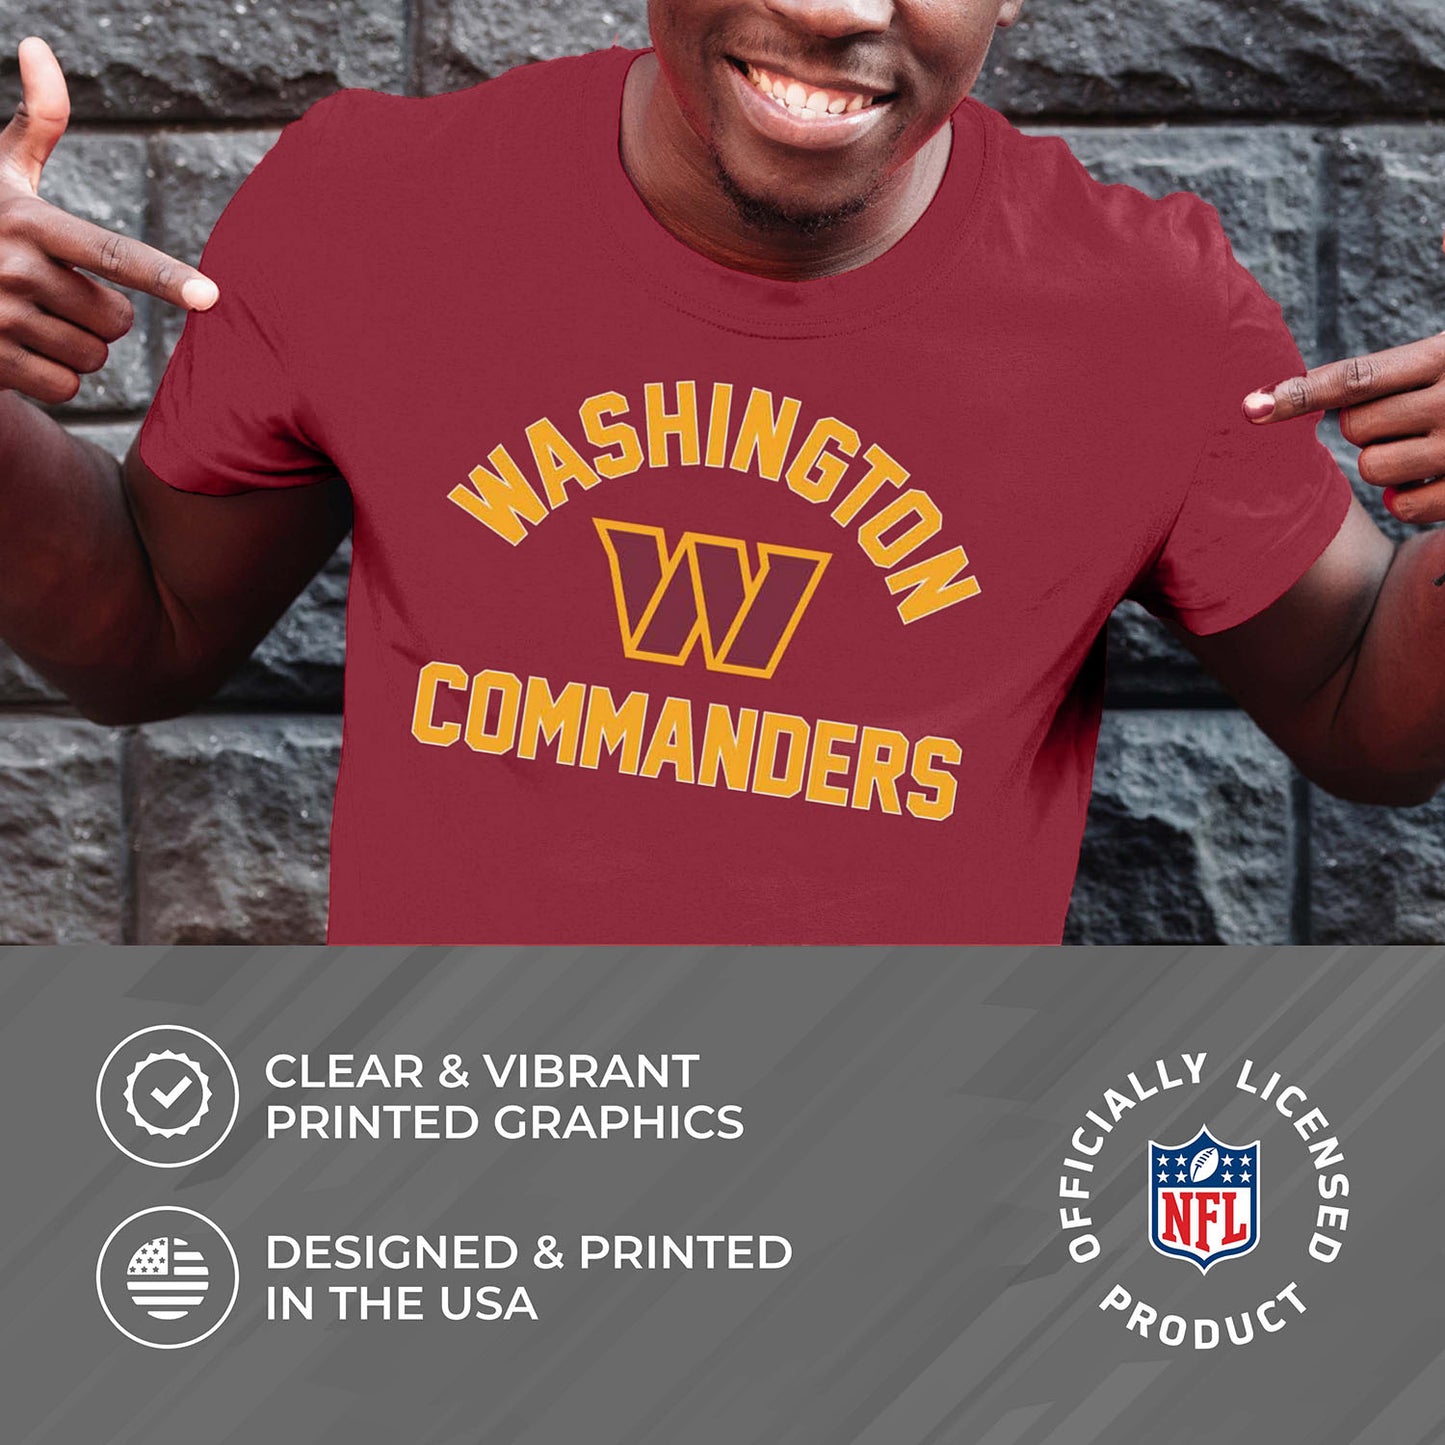 Washington Commanders NFL Adult Gameday T-Shirt - Maroon